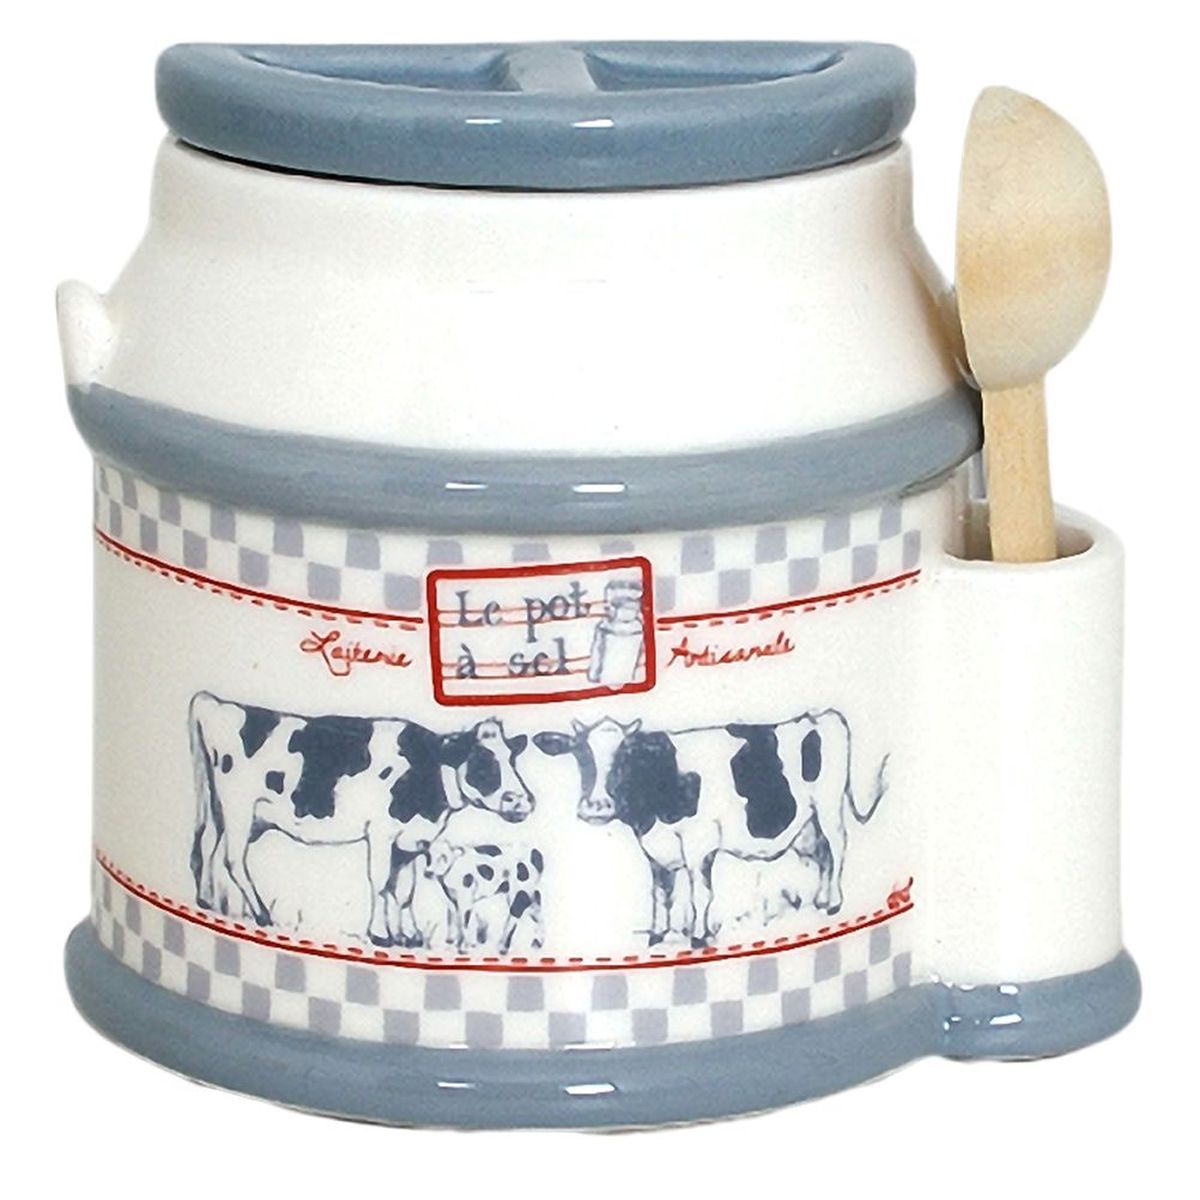 Ceramic salt box with spoon - MILK